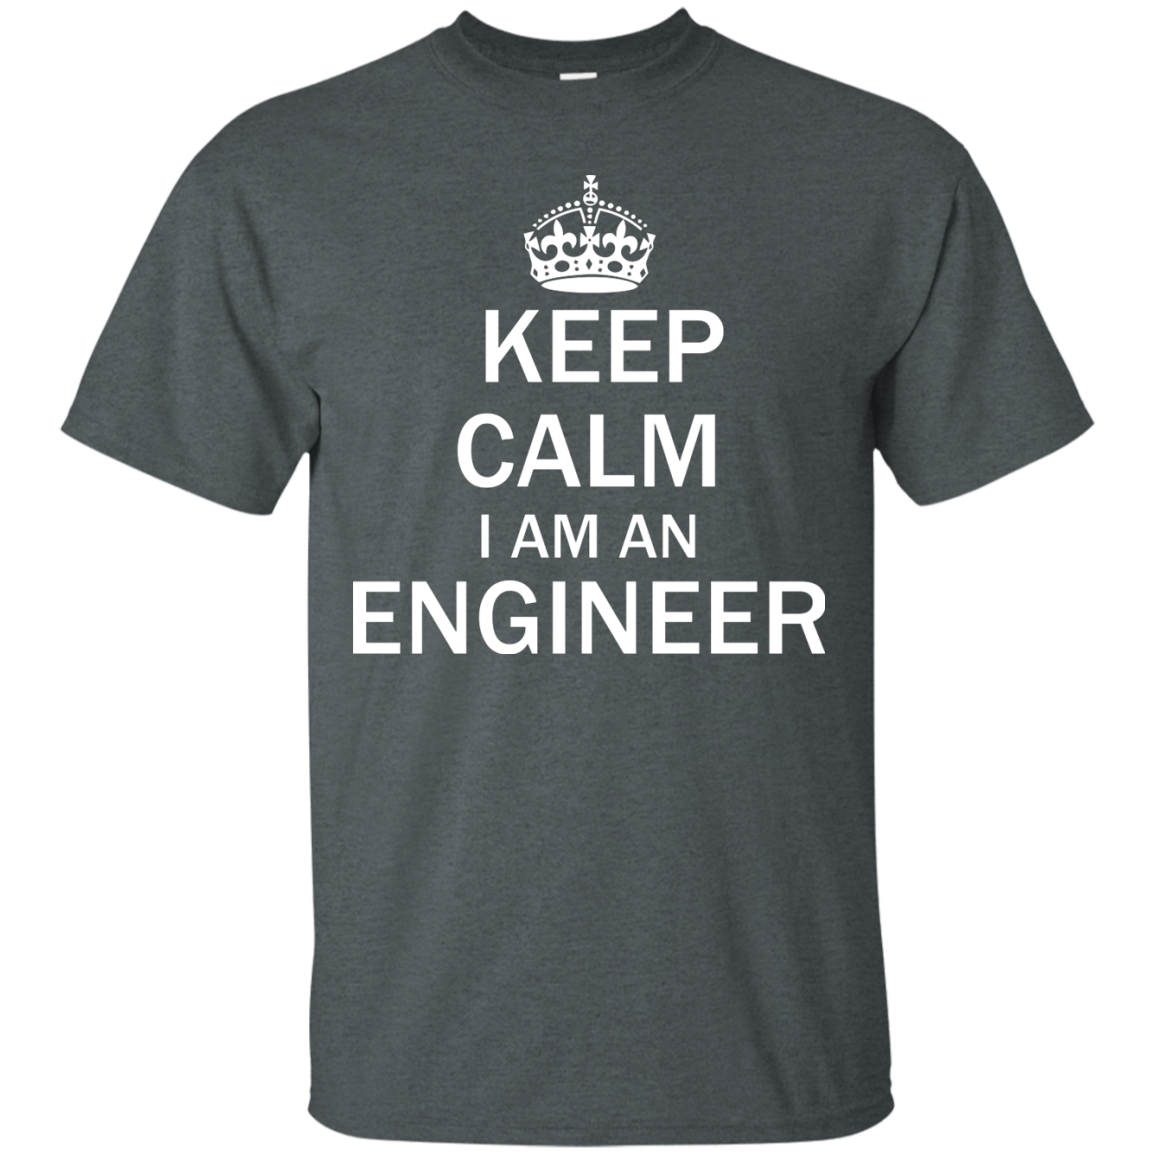 Mantenga la calma: soy ingeniero